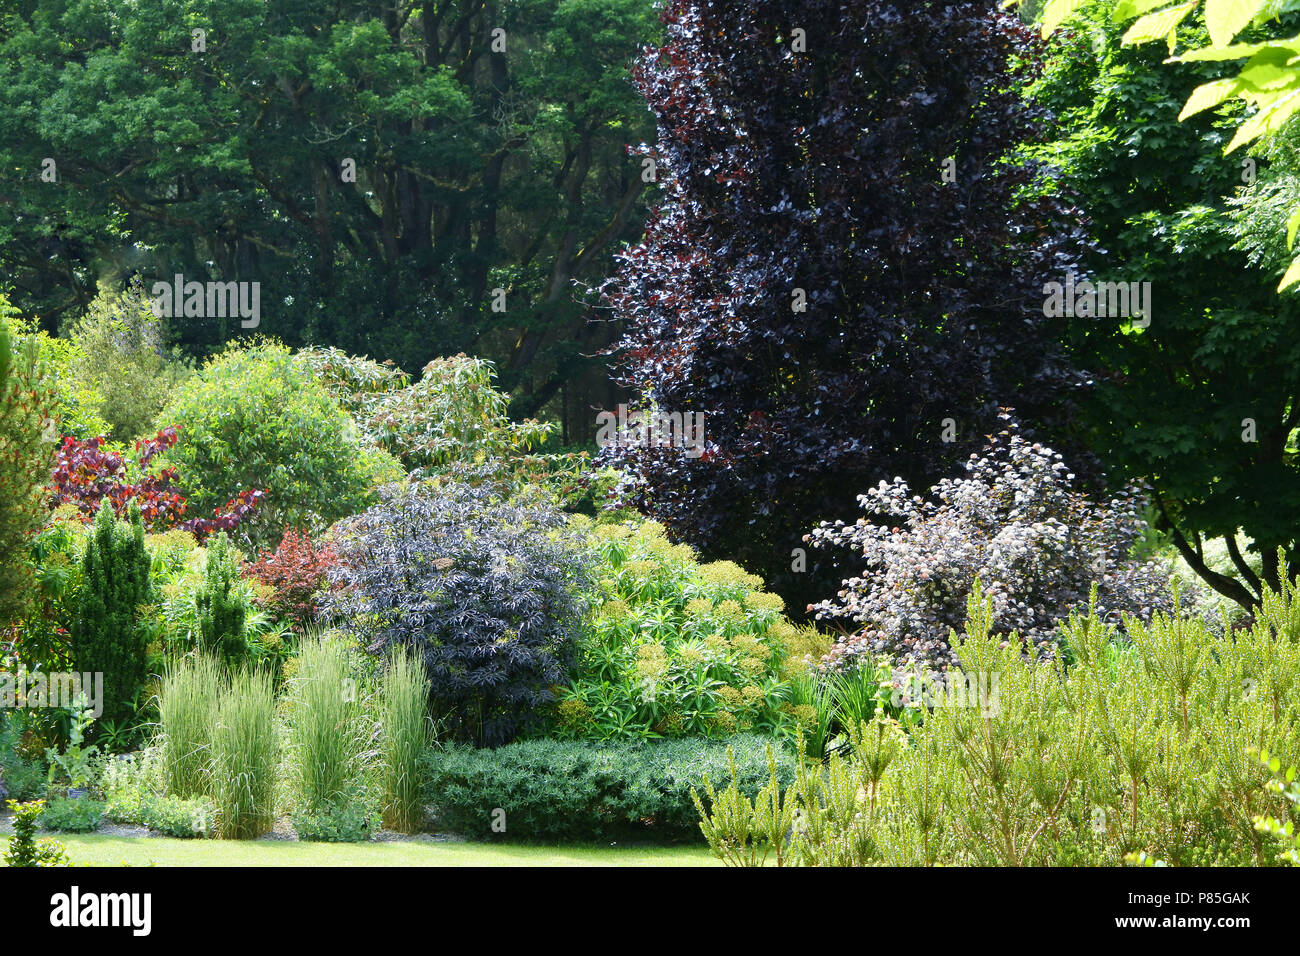 A classic English garden, RHS Rosemoor, Devon, UK - John Gollop Stock Photo